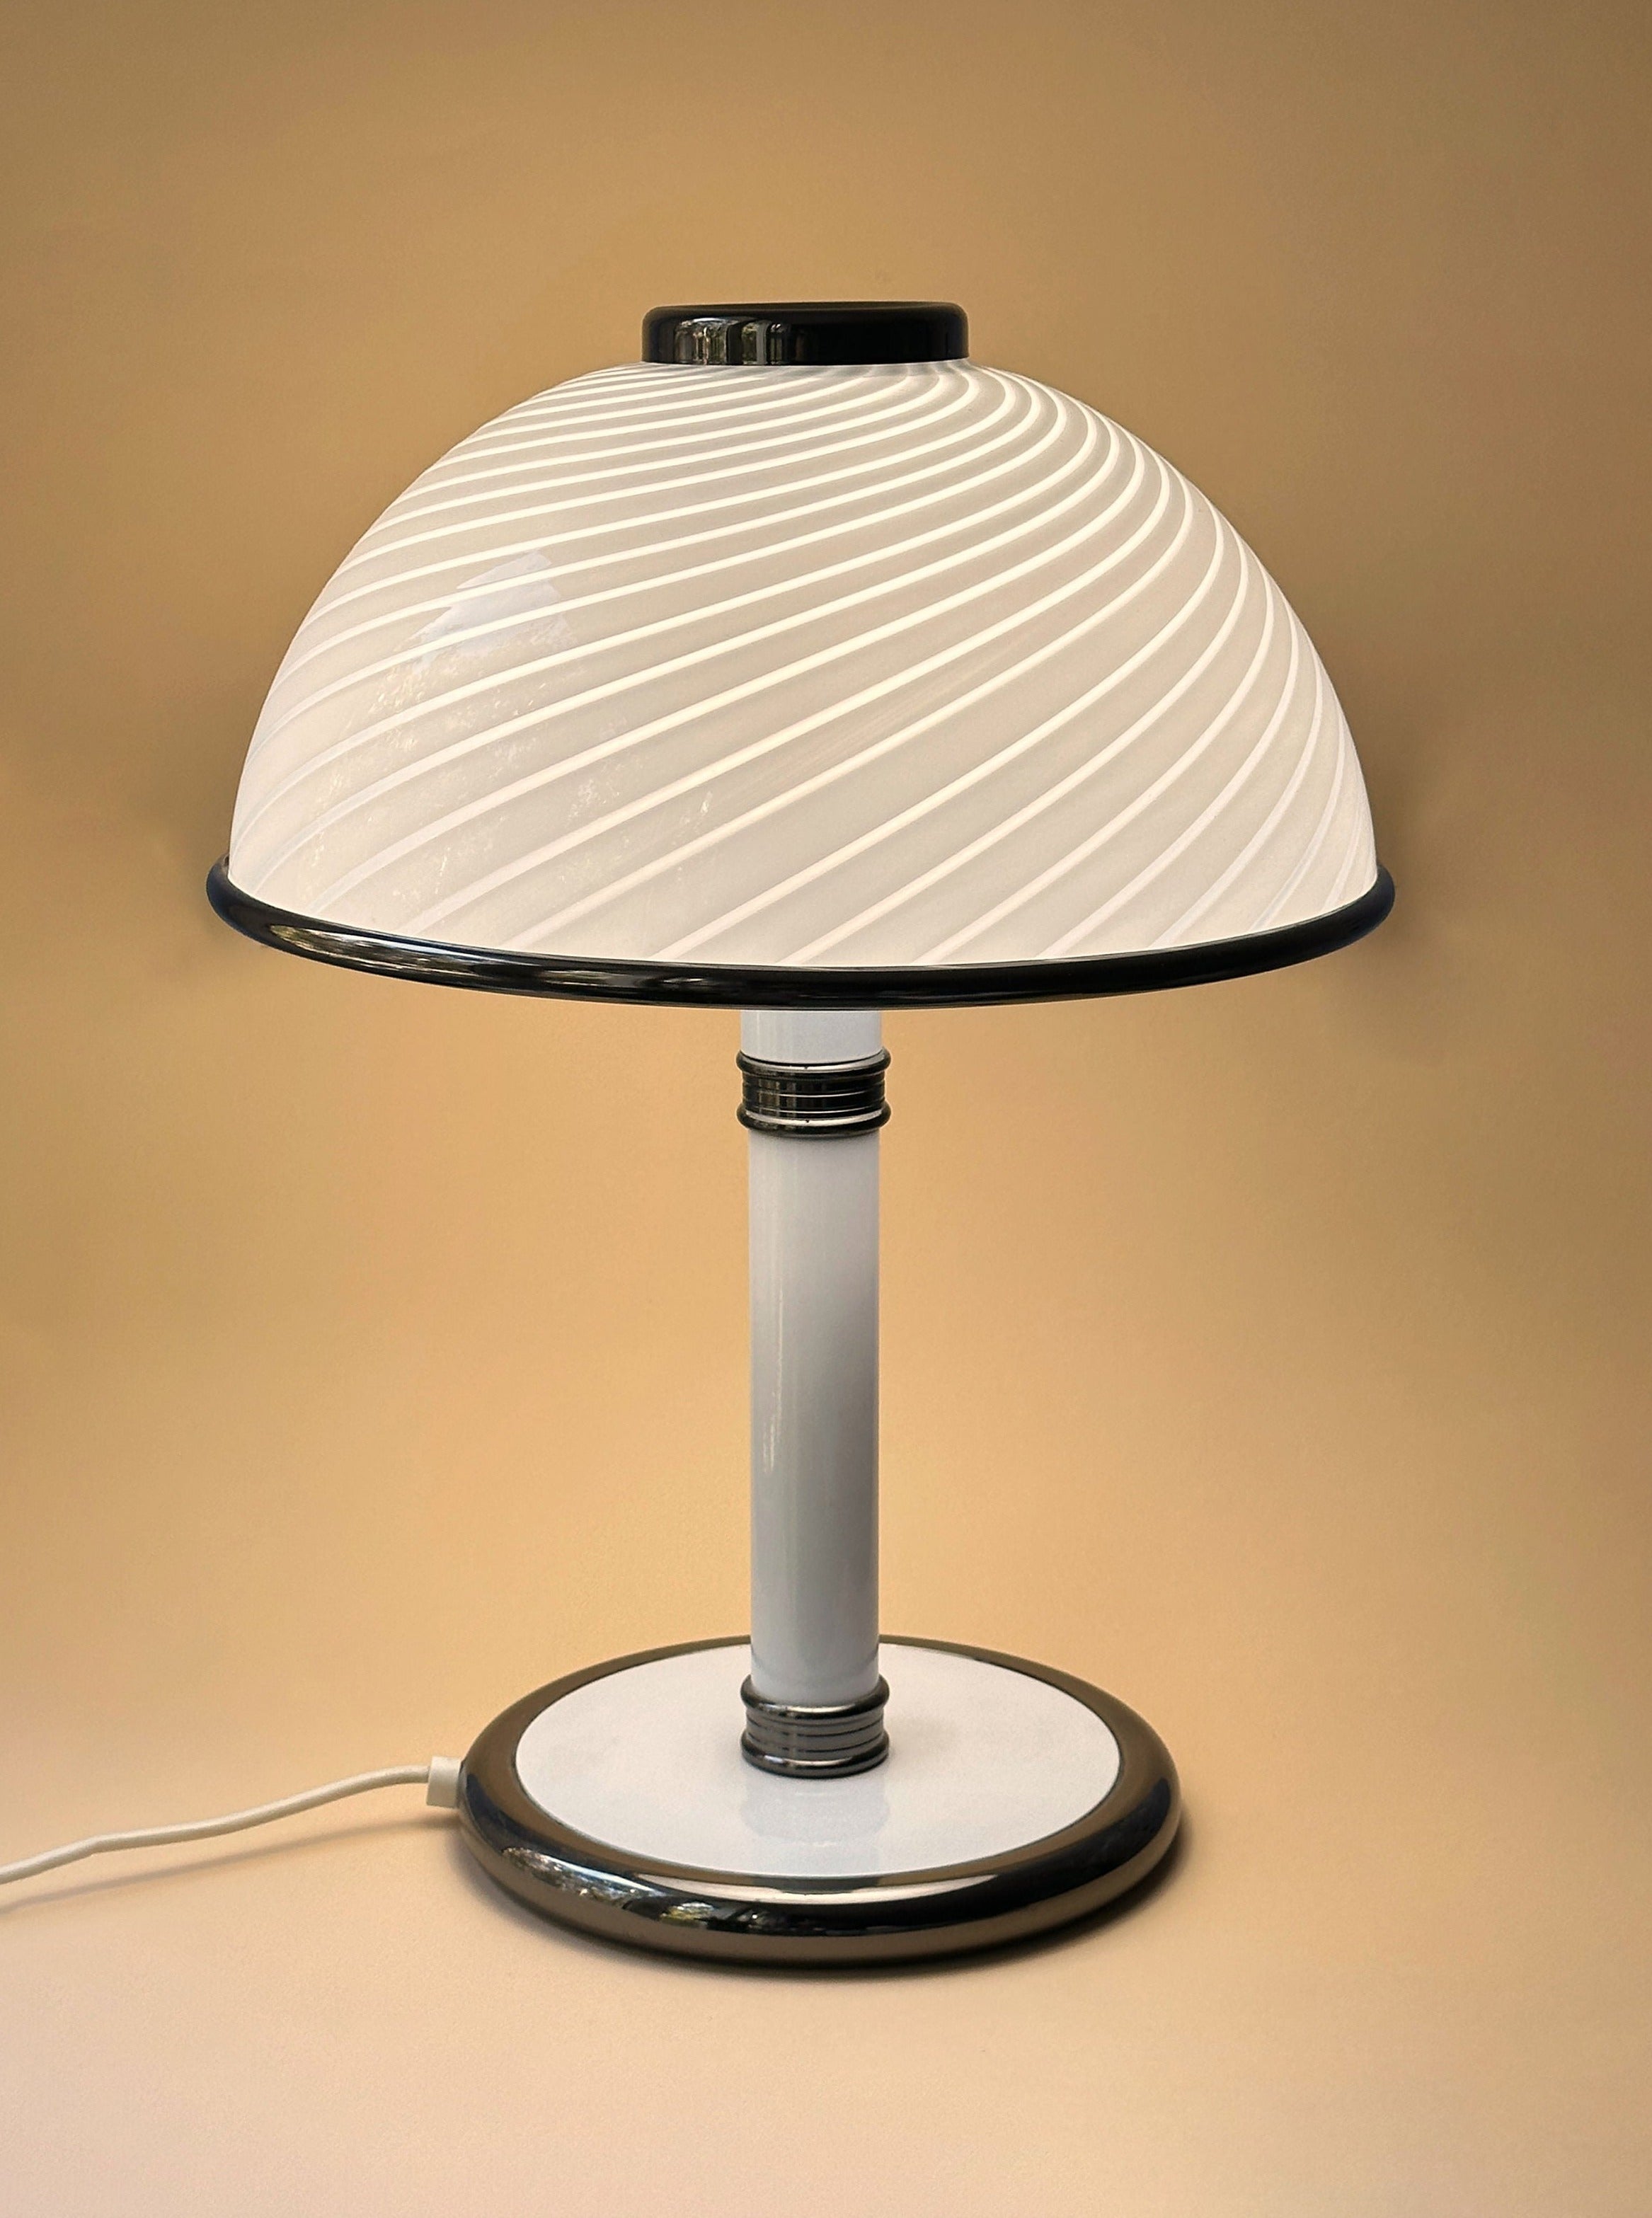 Murano Swirl Mushroom Table Lamp by F Fabbian for Mazzega 1980s